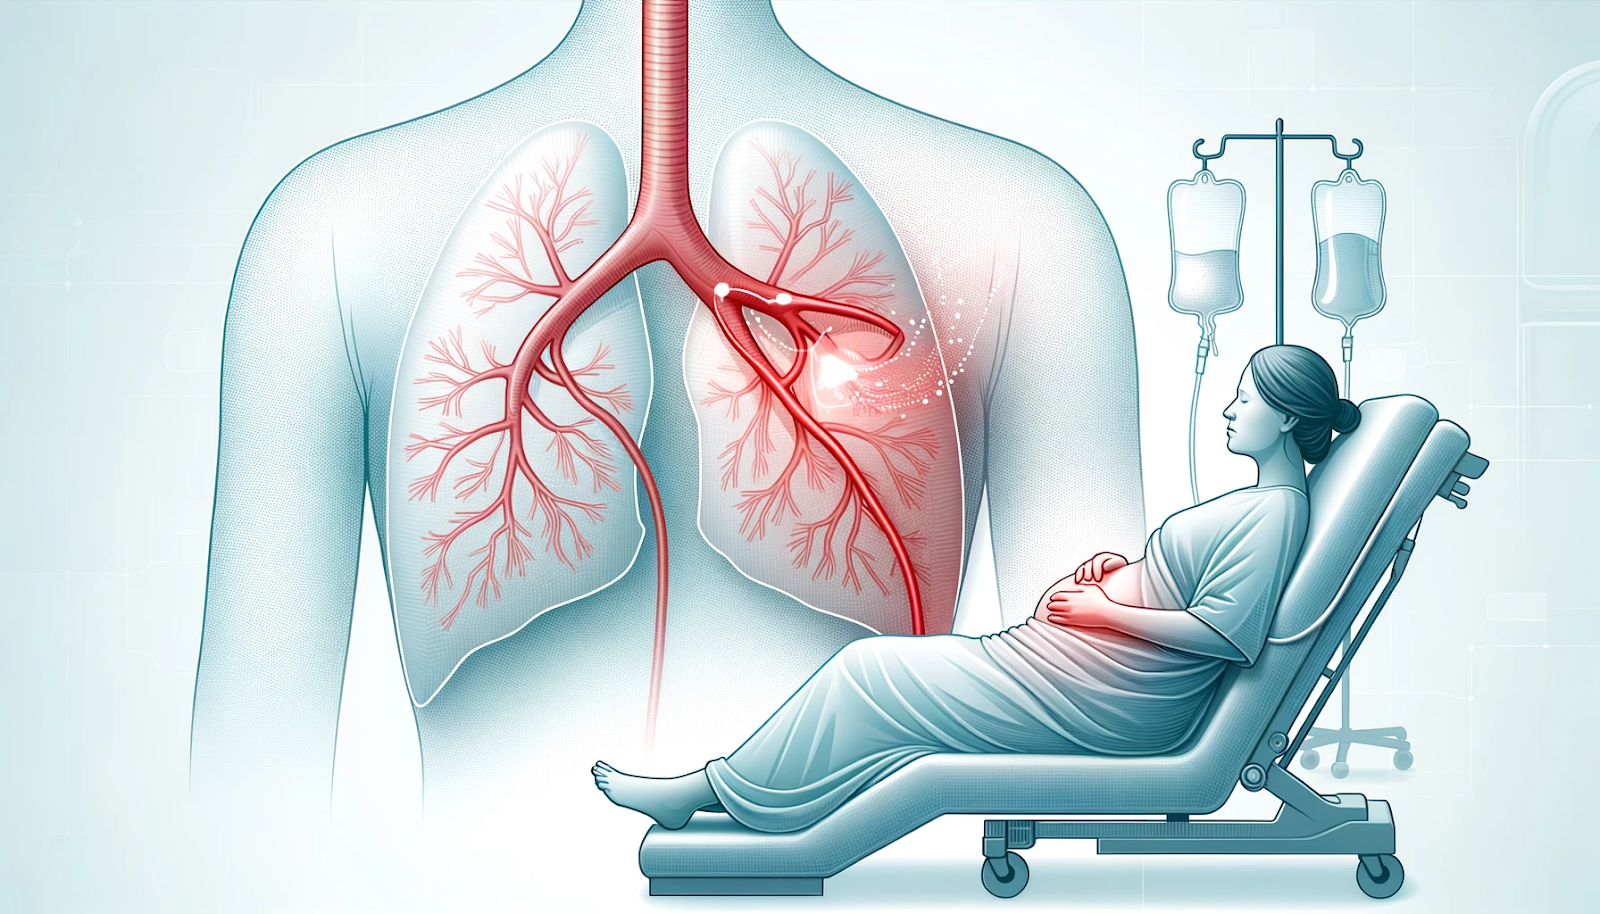 Risk of Pulmonary Embolism